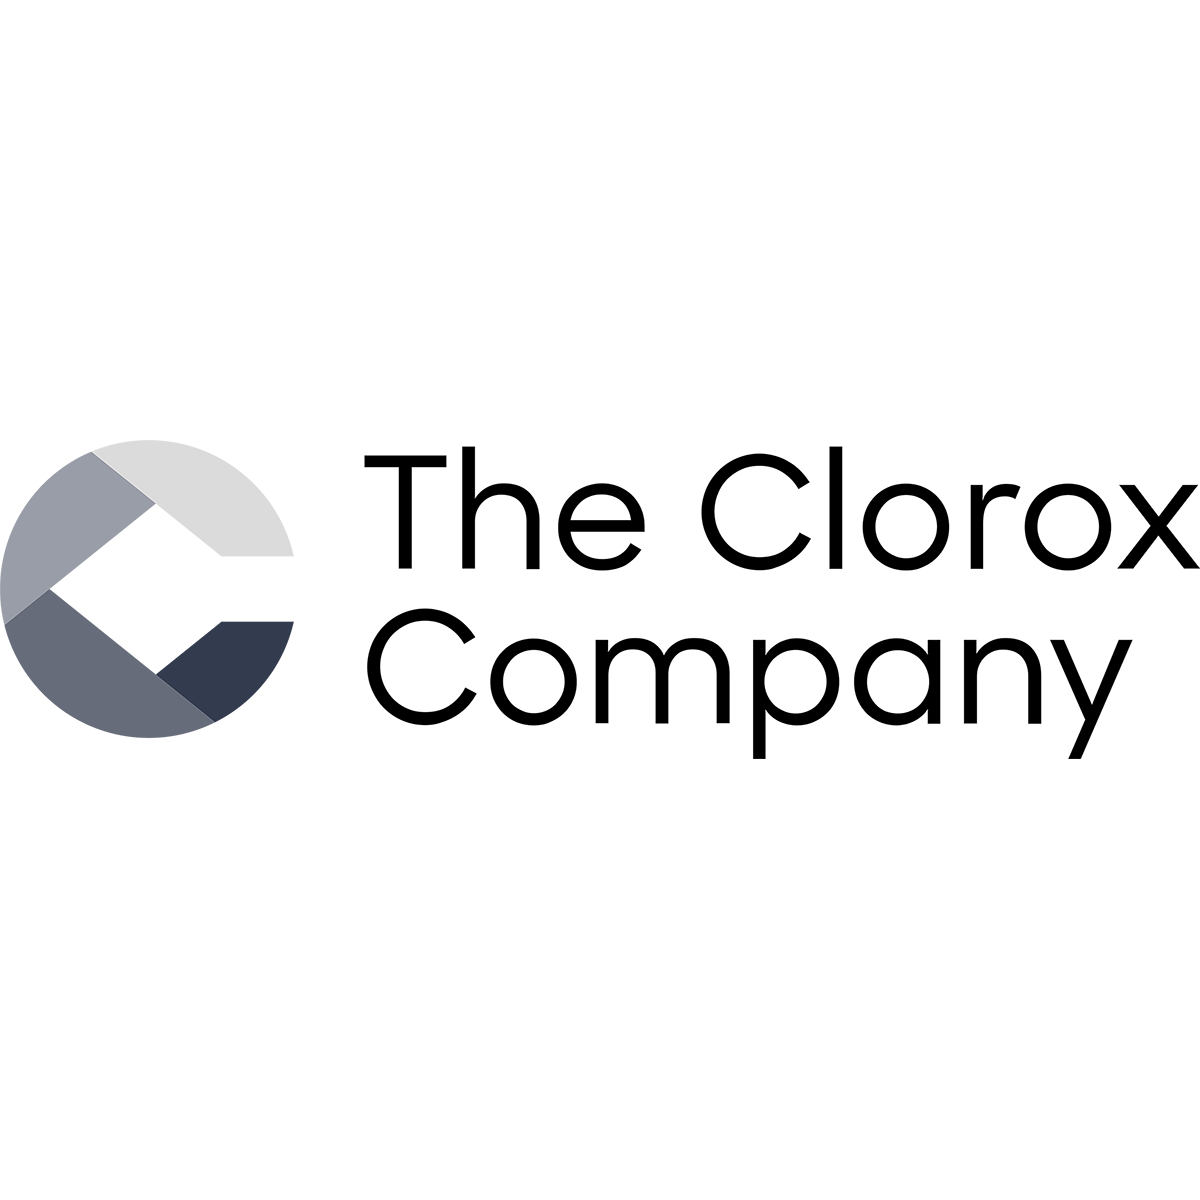 The Clorox Company logo image